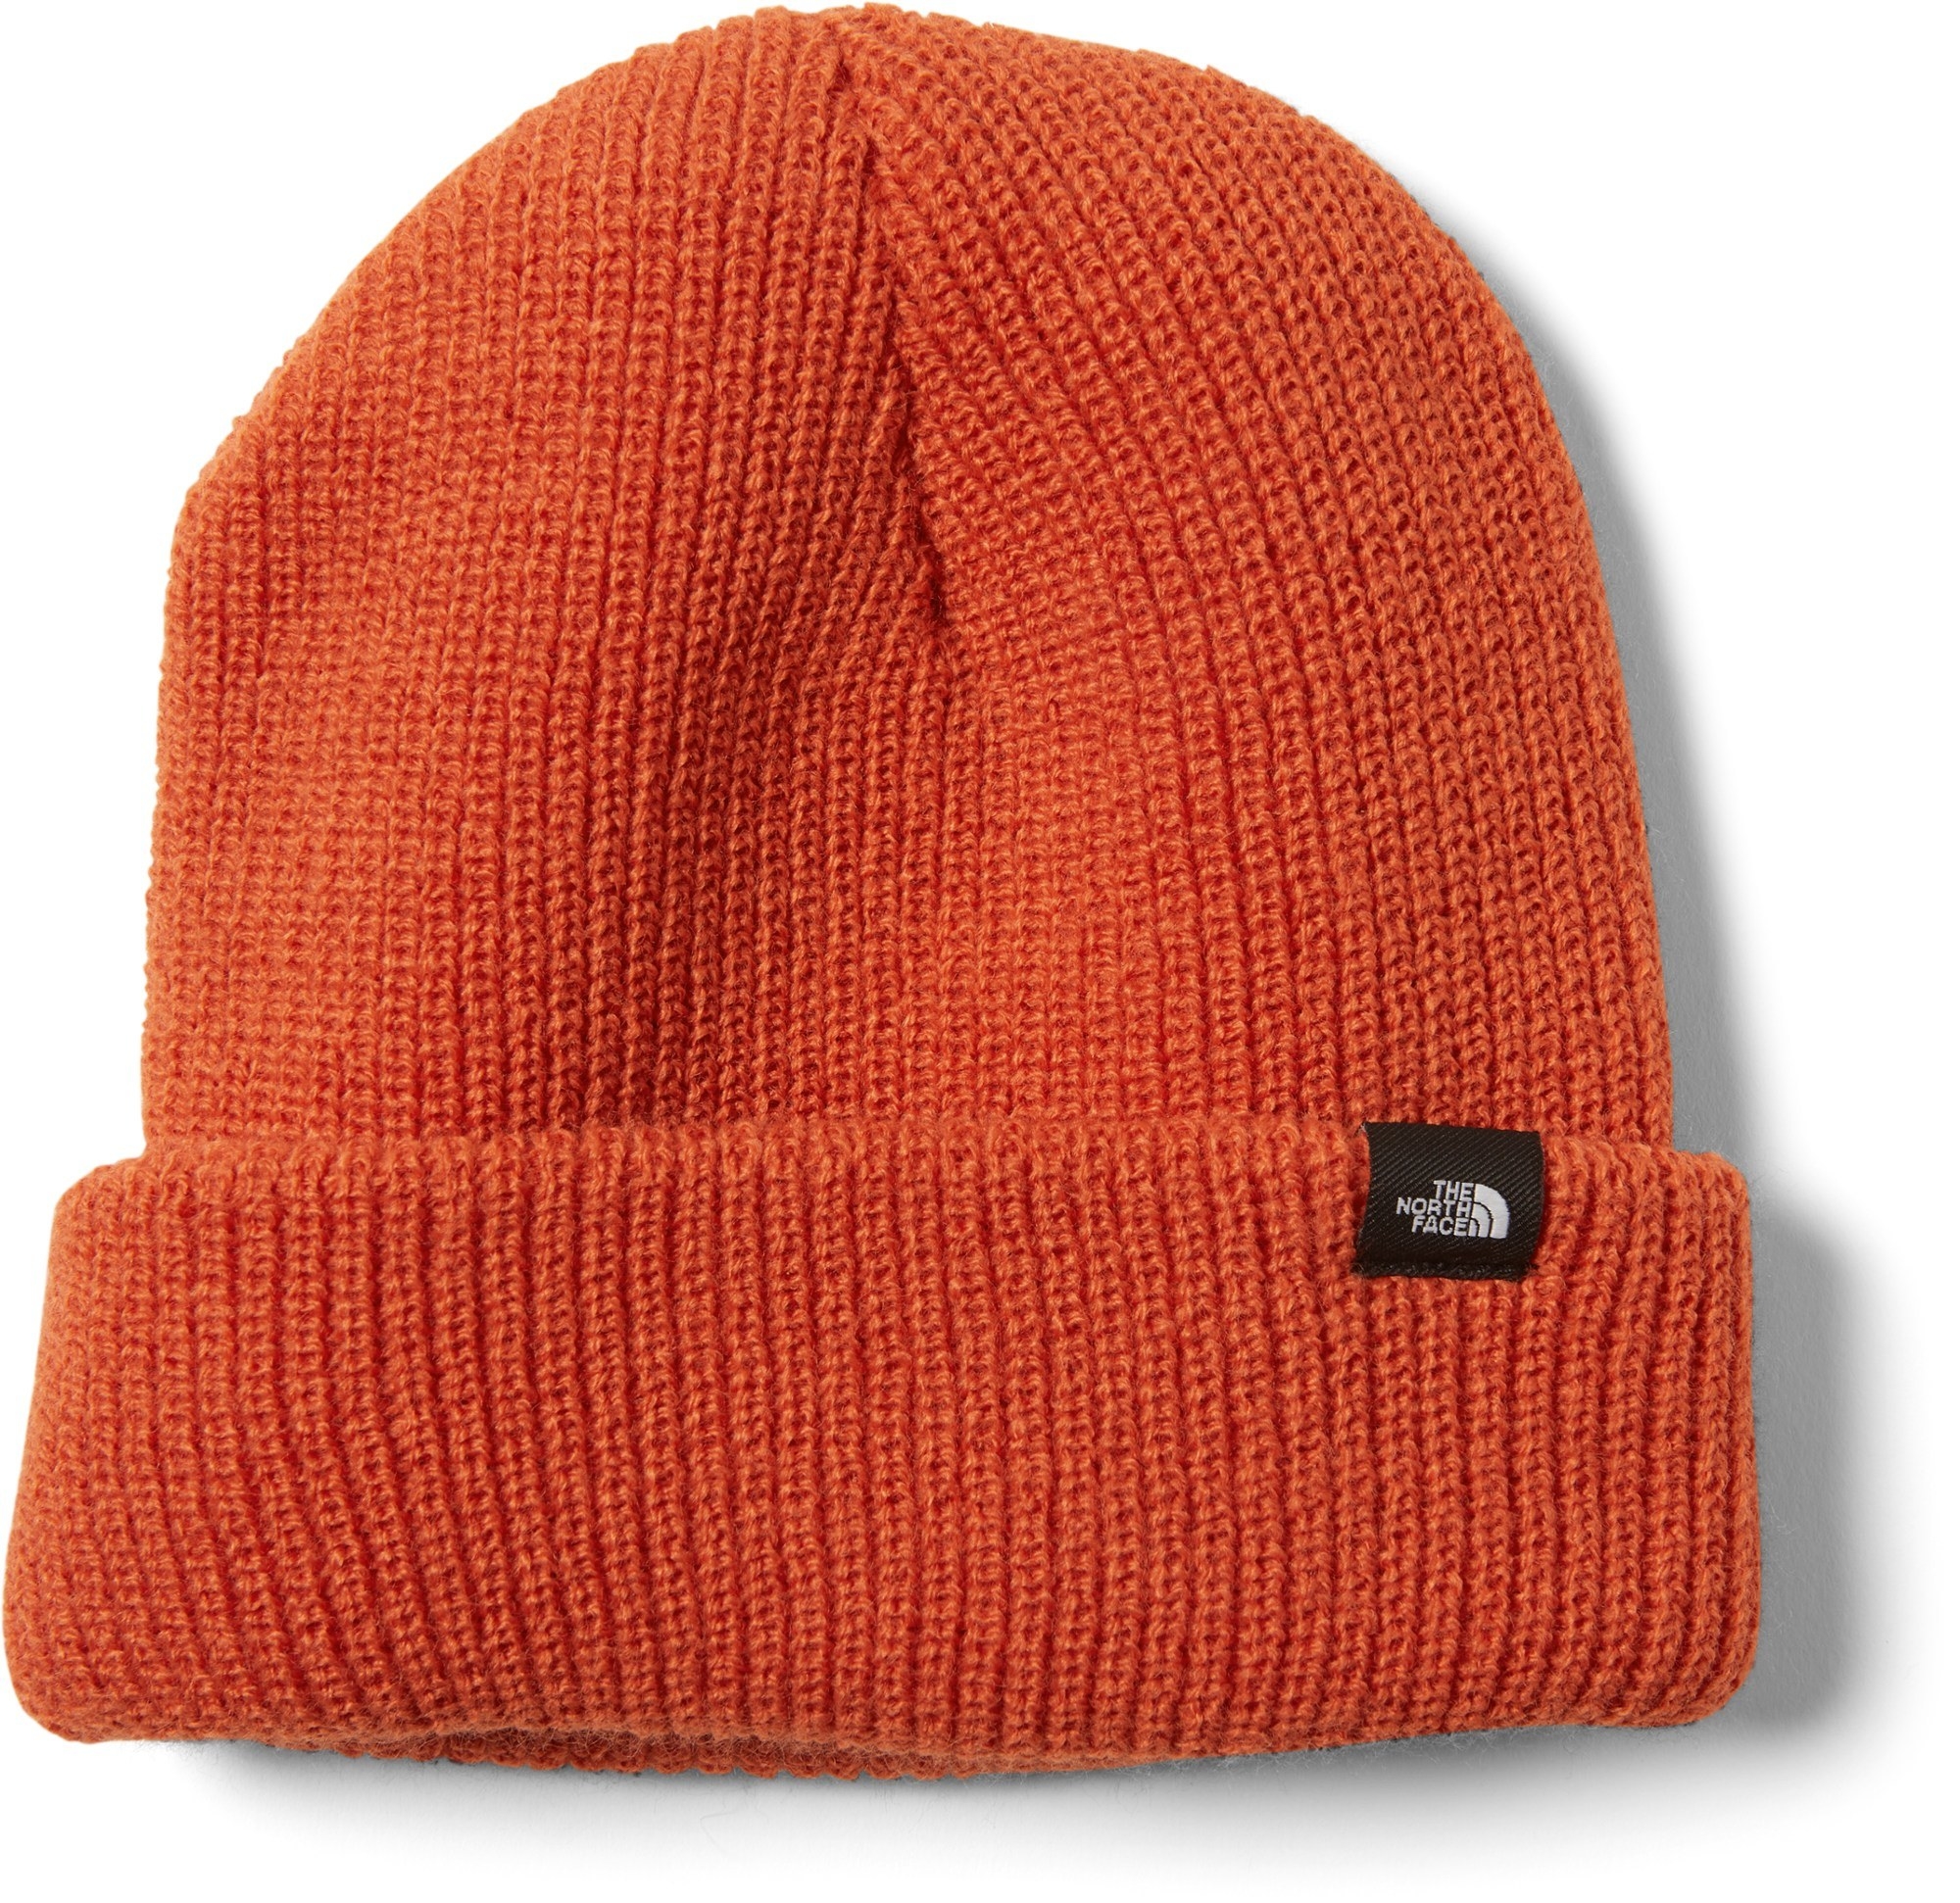 orange knit beanie wiht a small north face logo label